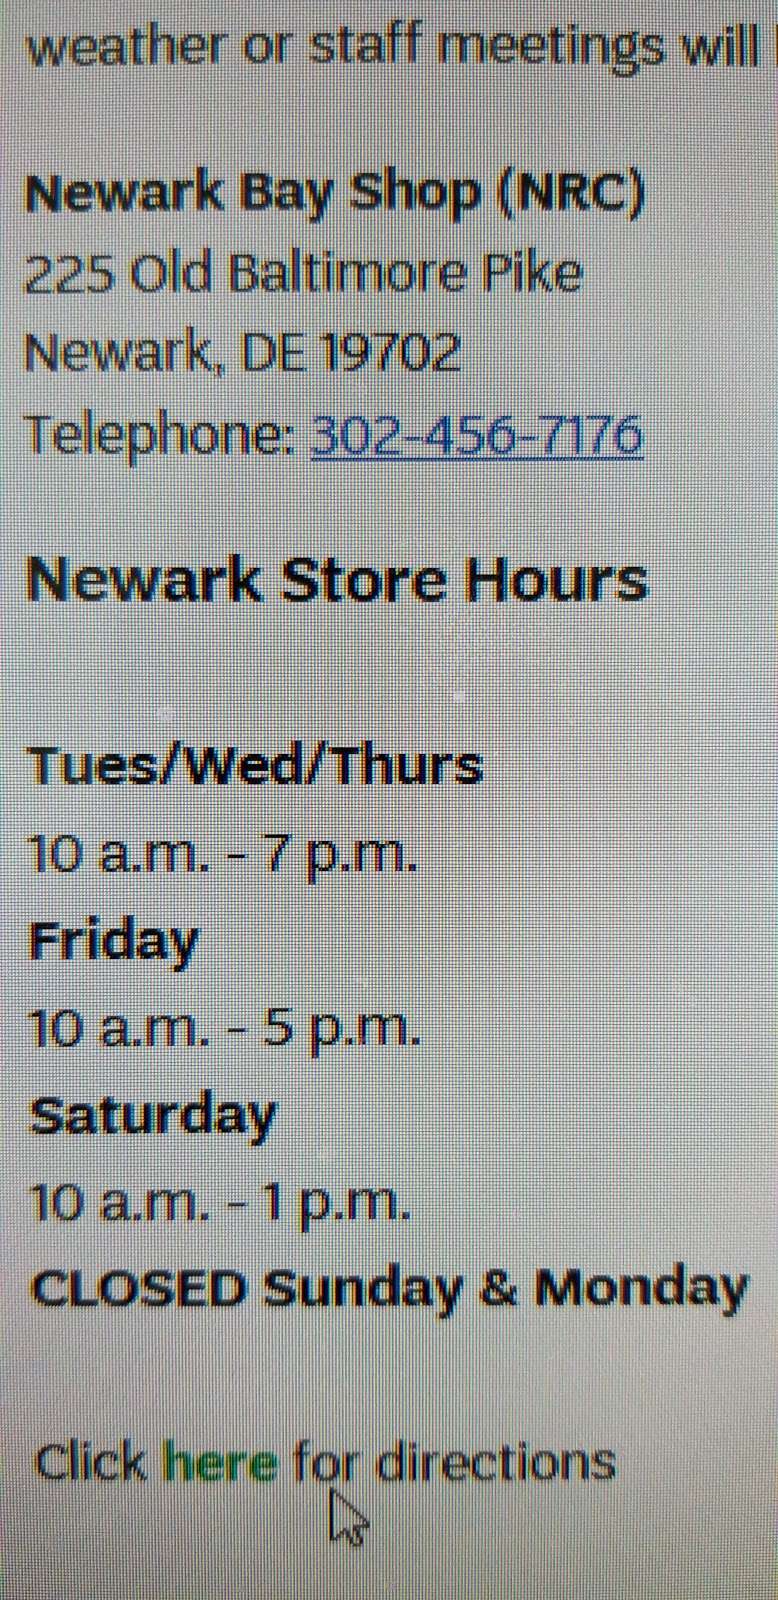 GSCB Newark BAY Shop | 225 S Old Baltimore Pike, Newark, DE 19702, USA | Phone: (302) 456-7176